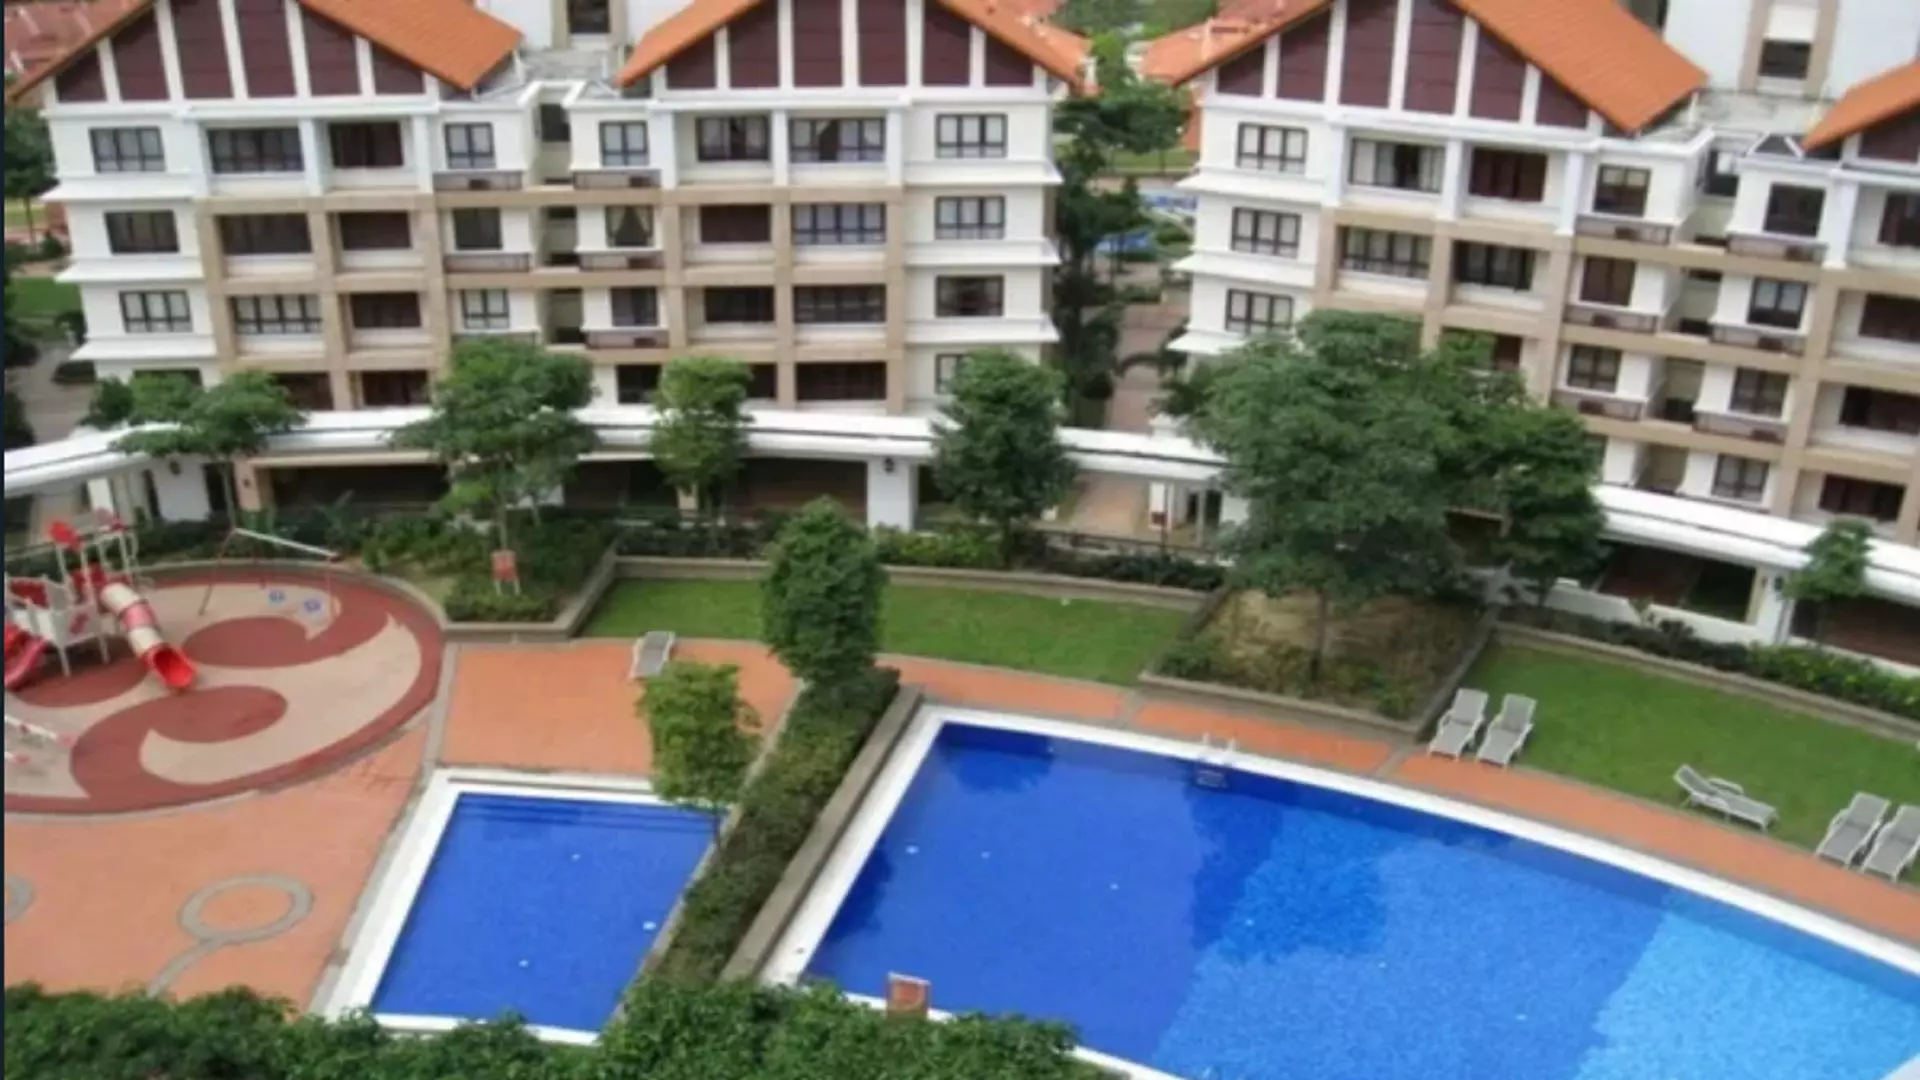 Condominium @ Surian Condominium, Mutiara Damansara, Petaling Jaya, Selangor for Auction9